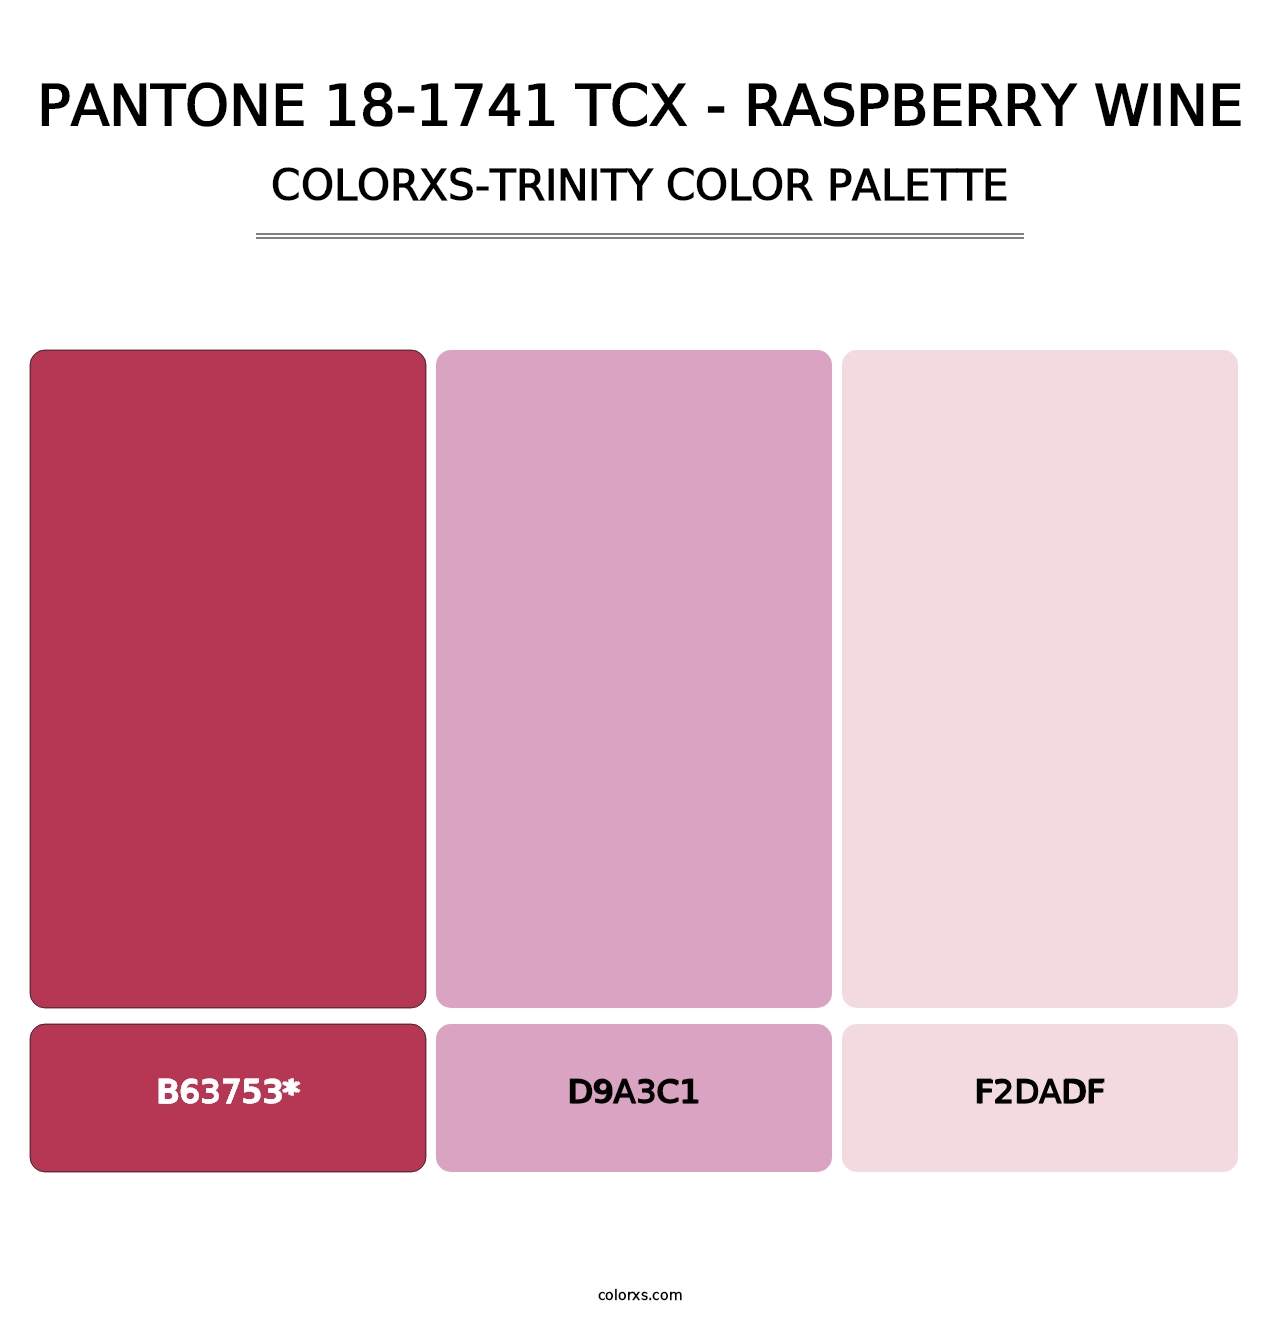 PANTONE 18-1741 TCX - Raspberry Wine - Colorxs Trinity Palette